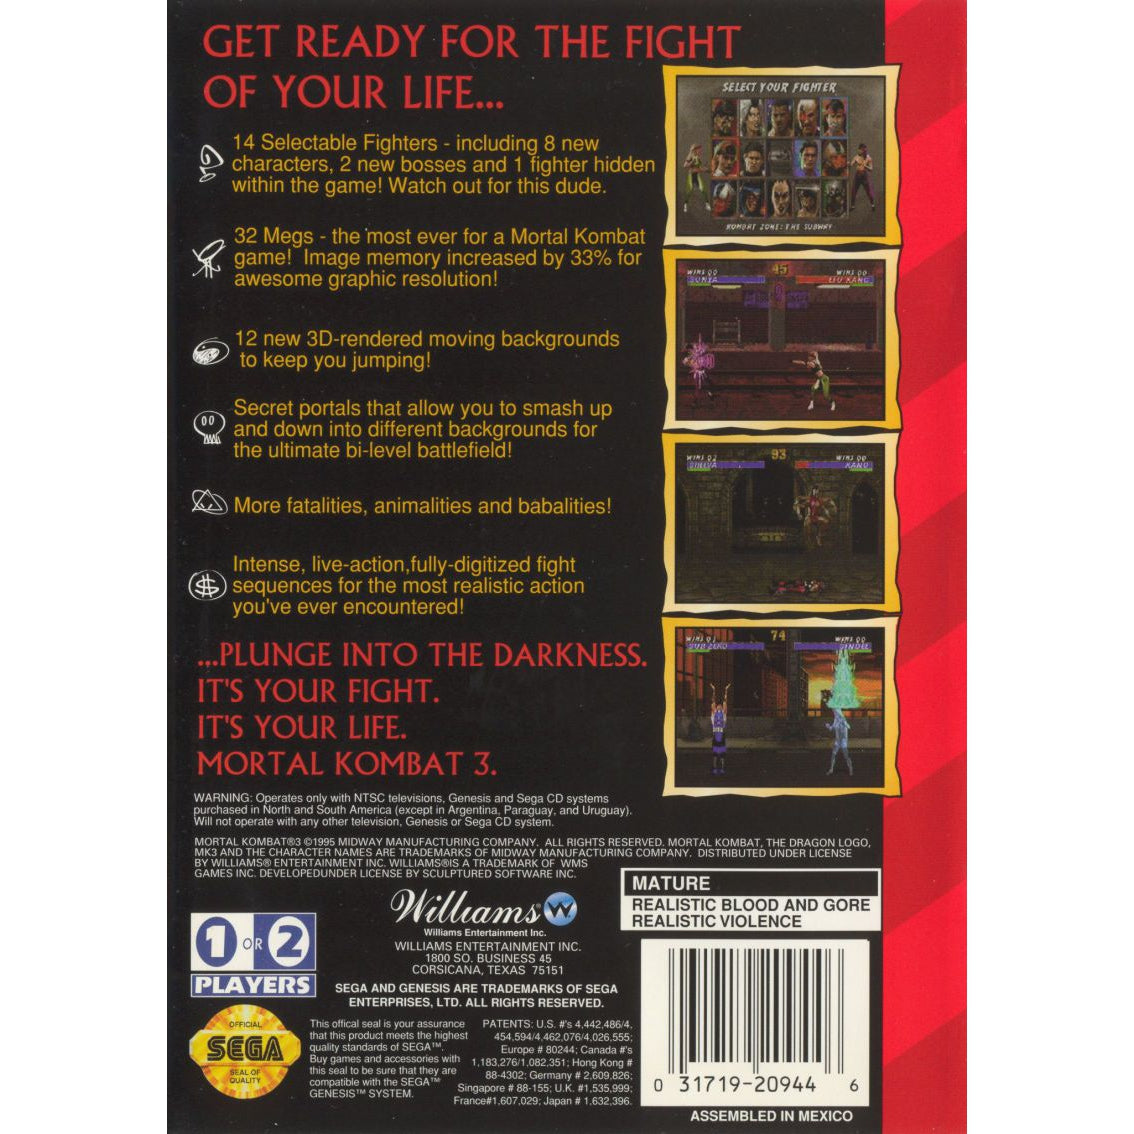 Mortal Kombat 3 - Sega Genesis Game Complete - YourGamingShop.com - Buy, Sell, Trade Video Games Online. 120 Day Warranty. Satisfaction Guaranteed.